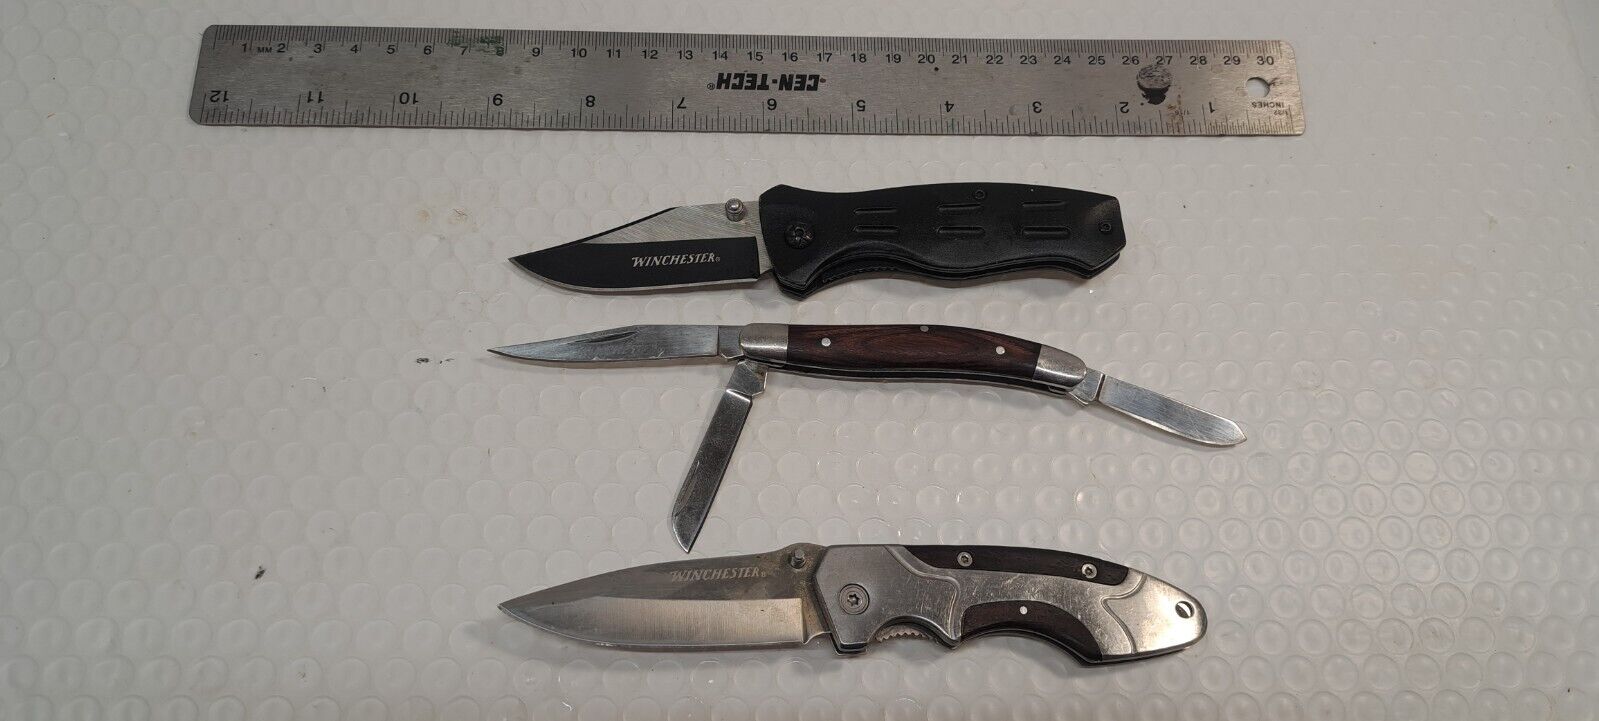 lot of 3 Winchester pocket knifes